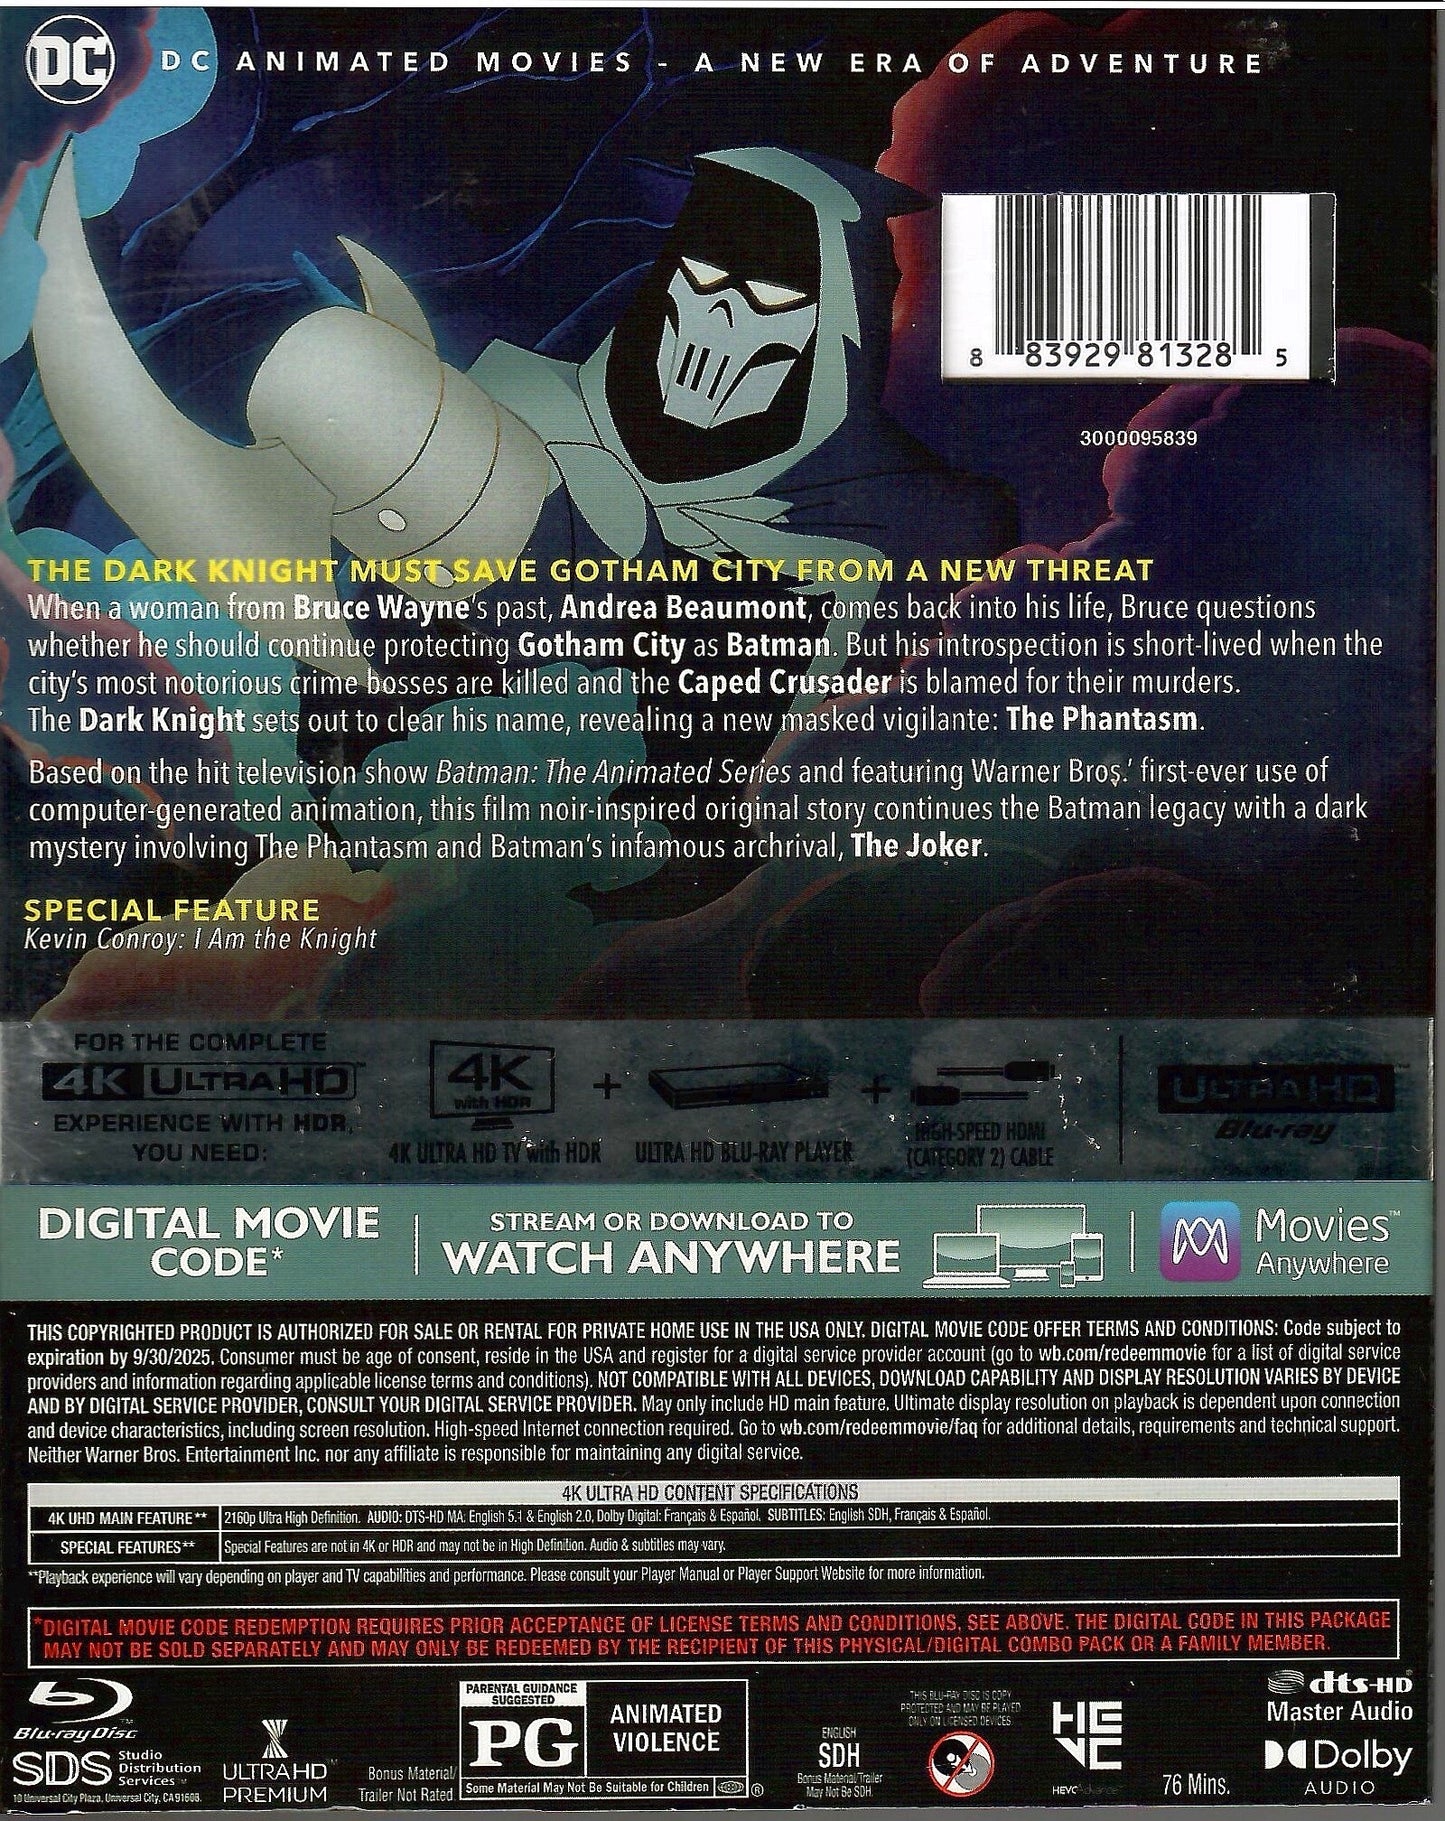 Batman: Mask of the Phantasm 4K w/ Comic (Exclusive)